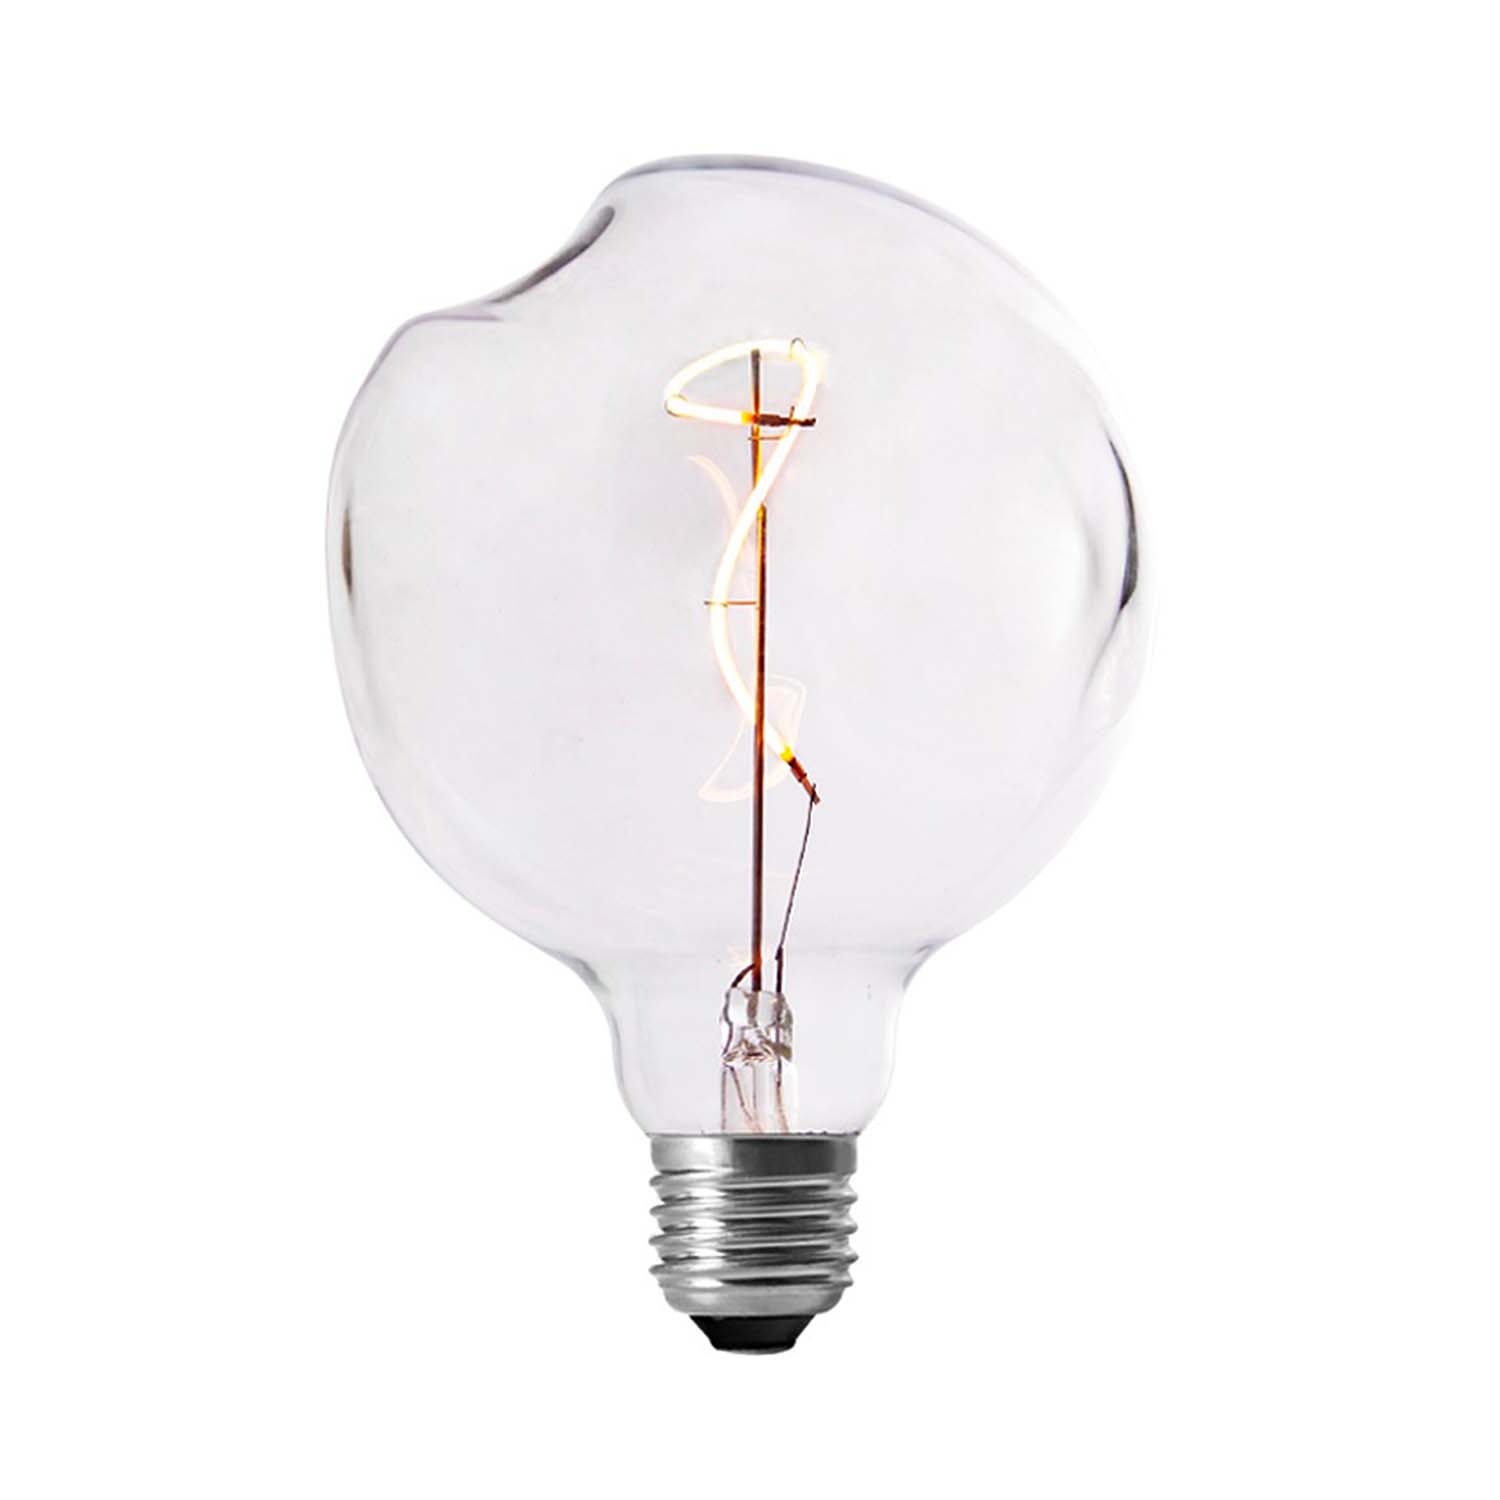 Shape - Asymmetrically distorted E27 LED bulb